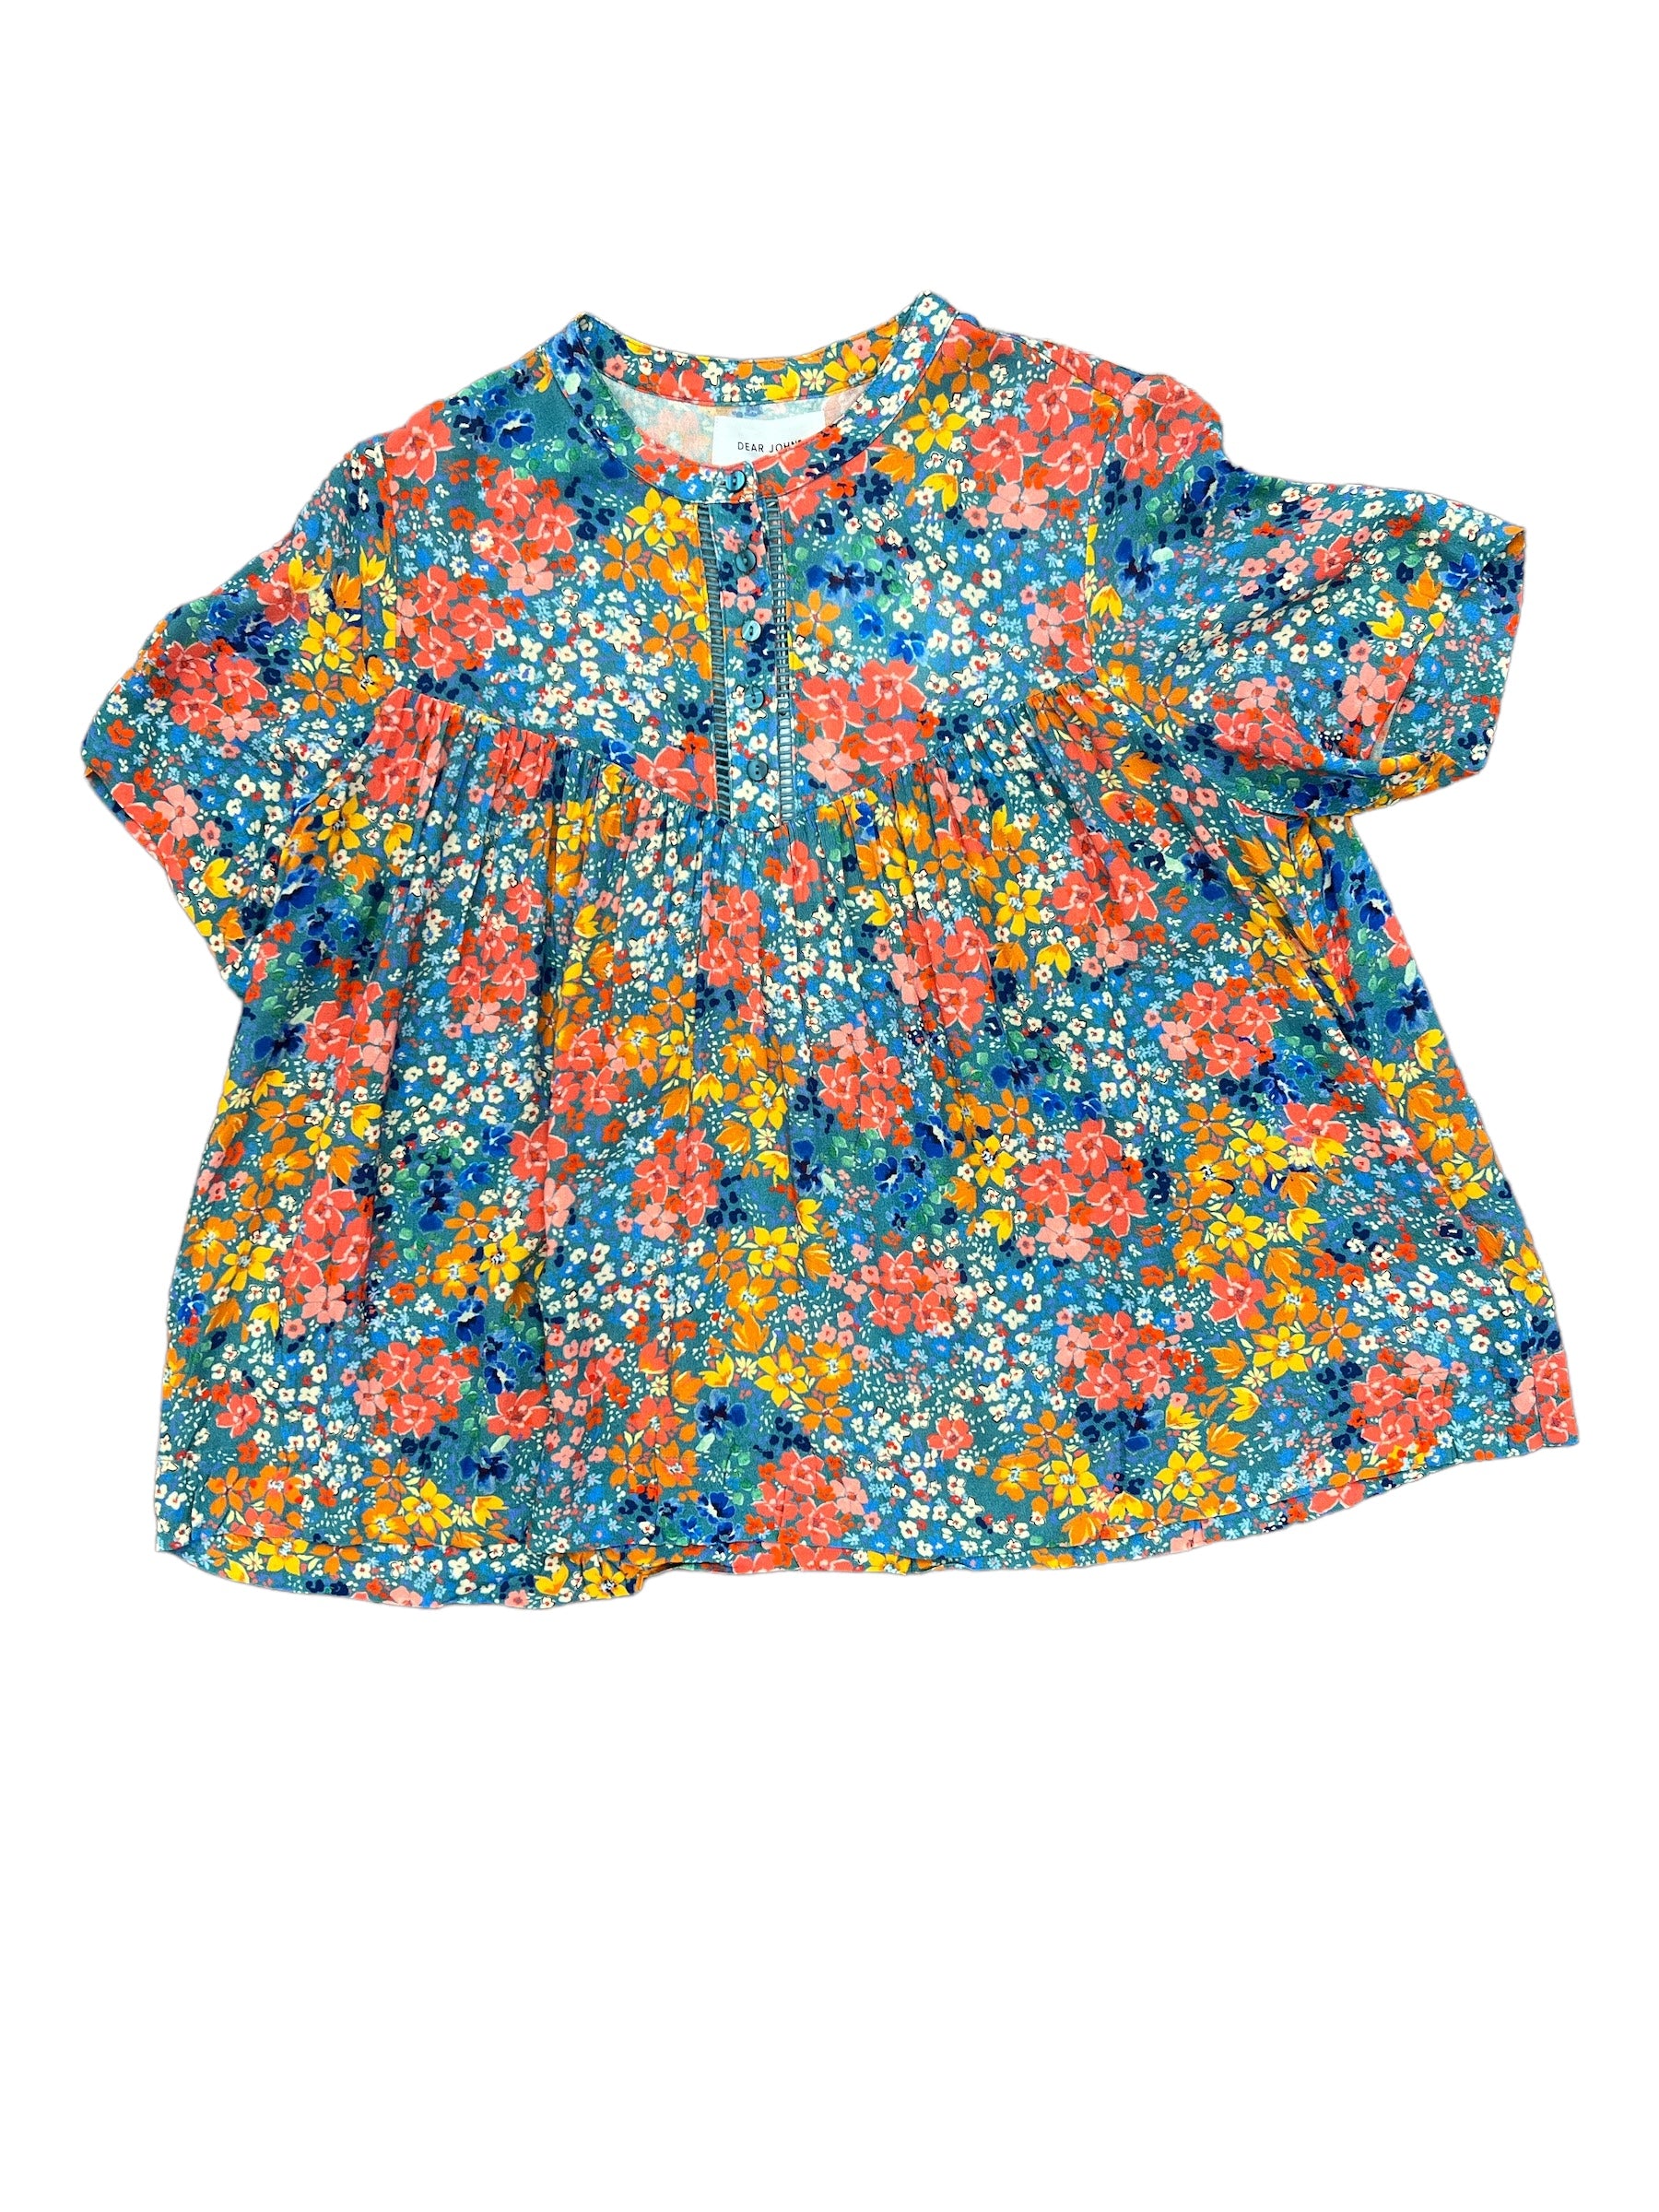 Joy Button Front Top Tropical Flower-130 Dressy Tops & Blouses-Dear John-Simply Stylish Boutique | Women’s & Kid’s Fashion | Paducah, KY